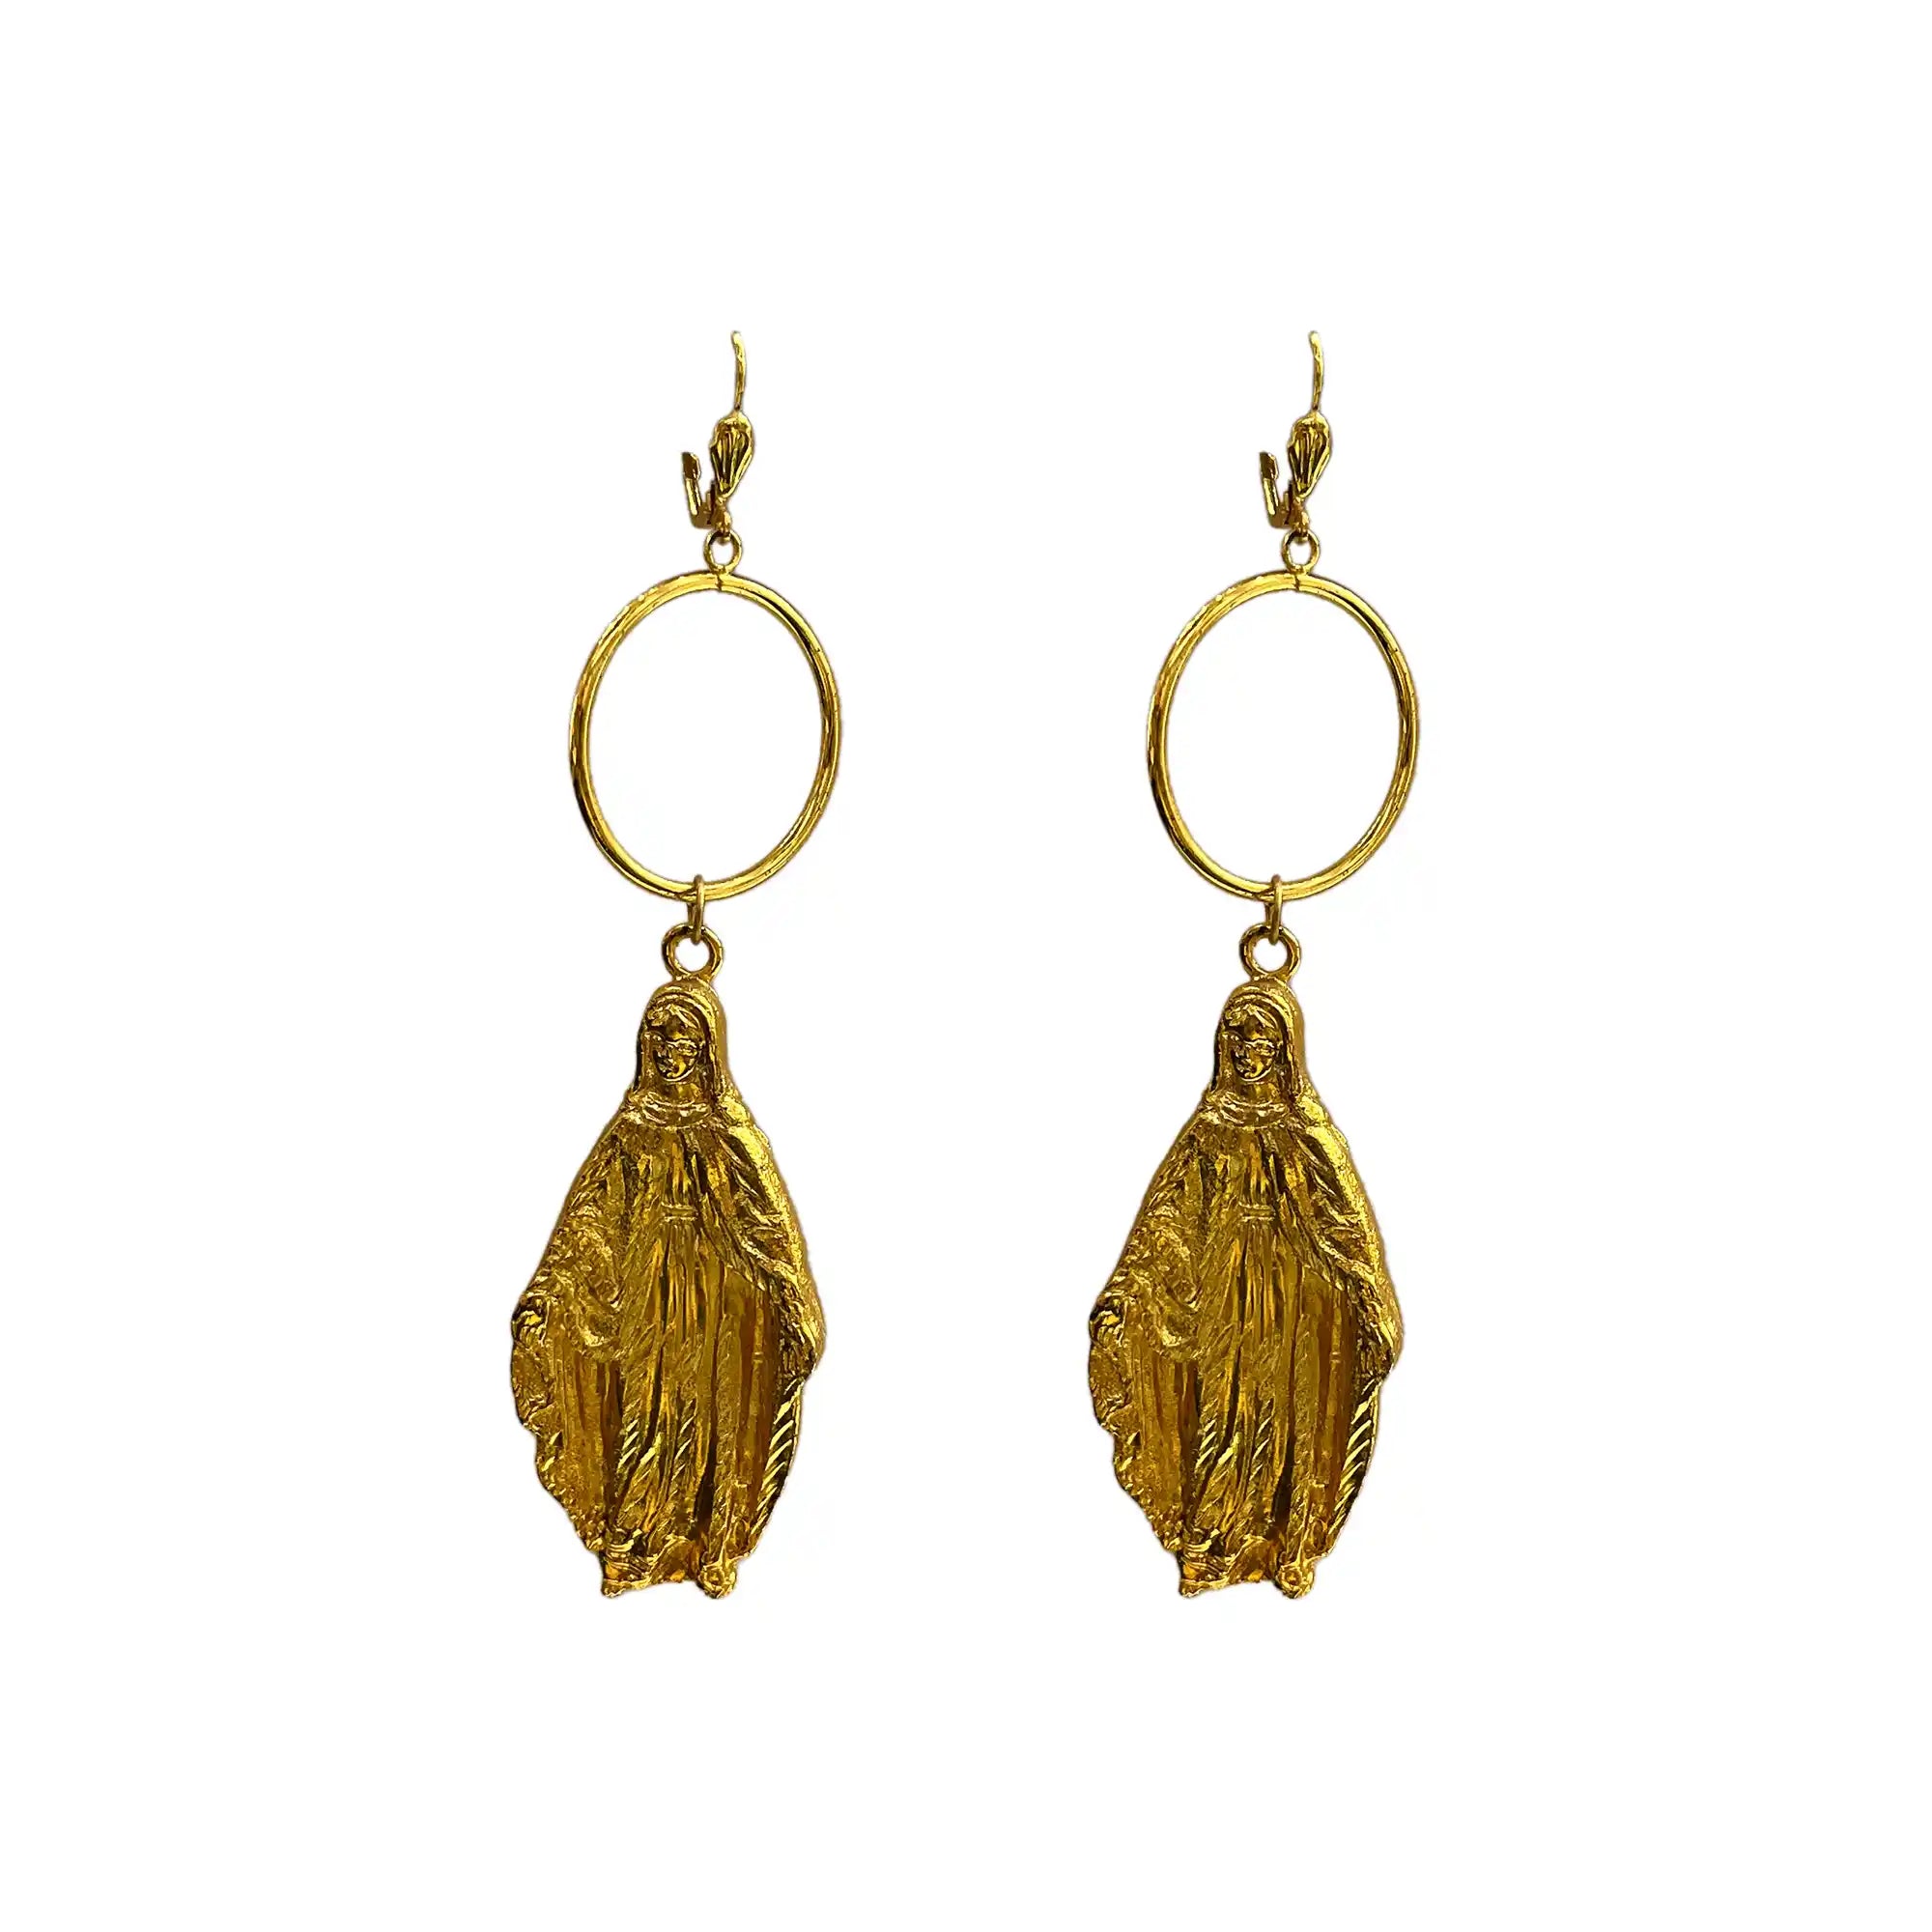 gold-plated earrings, mother mary earrings, bali hoop dangle earrings